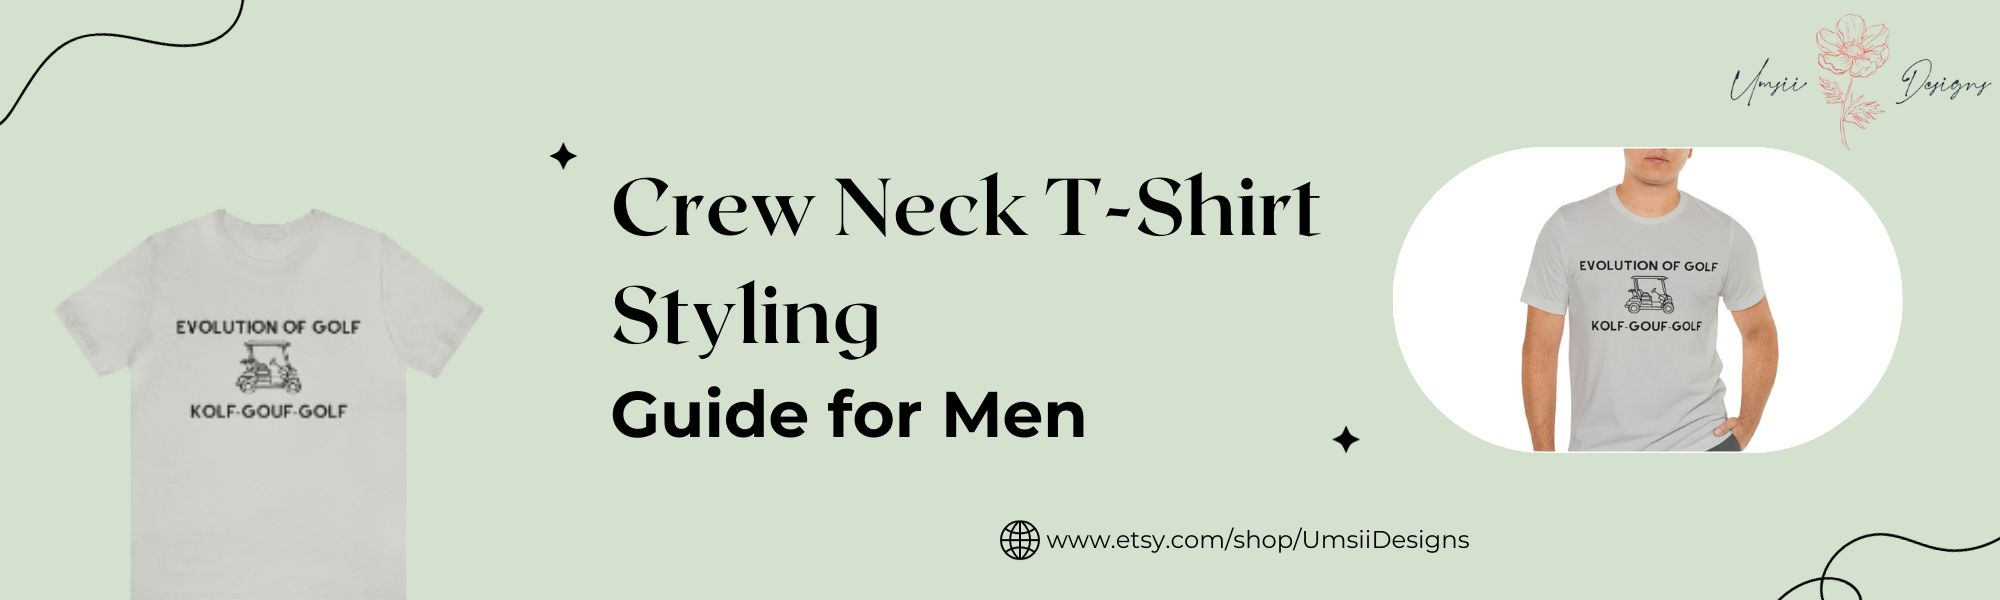 Crew Neck T-Shirt Styling Guide for Men - WriteUpCafe.com